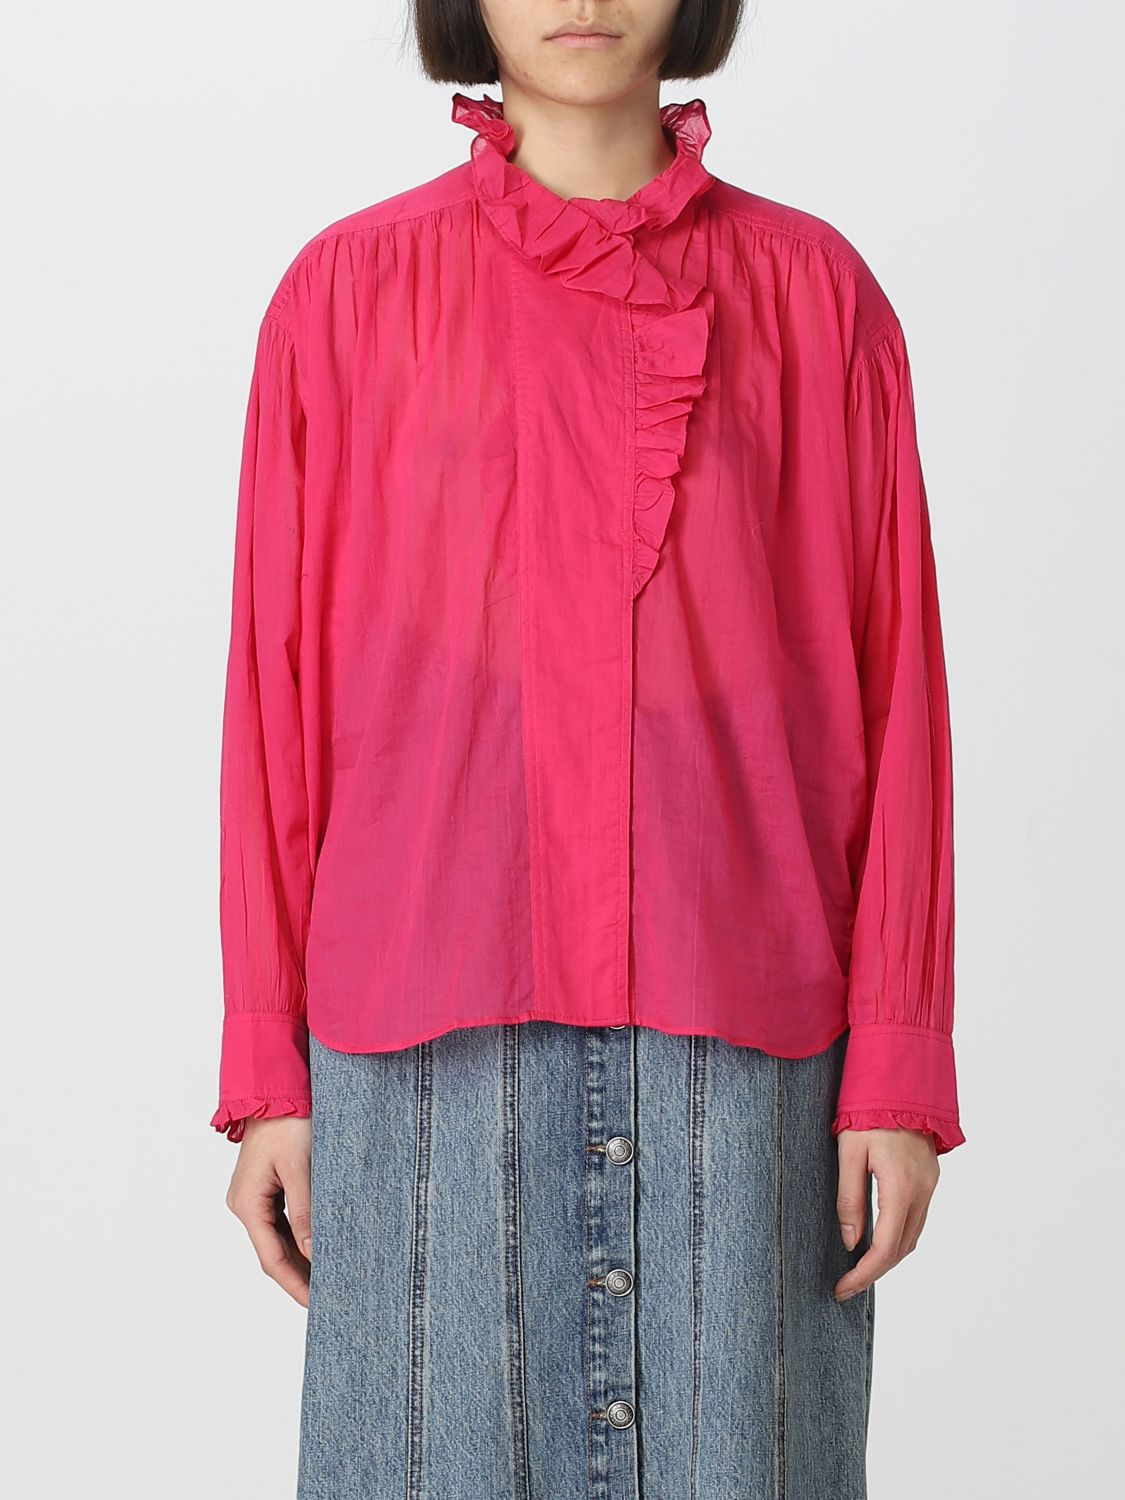 ISABEL MARANT ETOILE: shirt for woman - Fuchsia | Isabel Marant Etoile ...